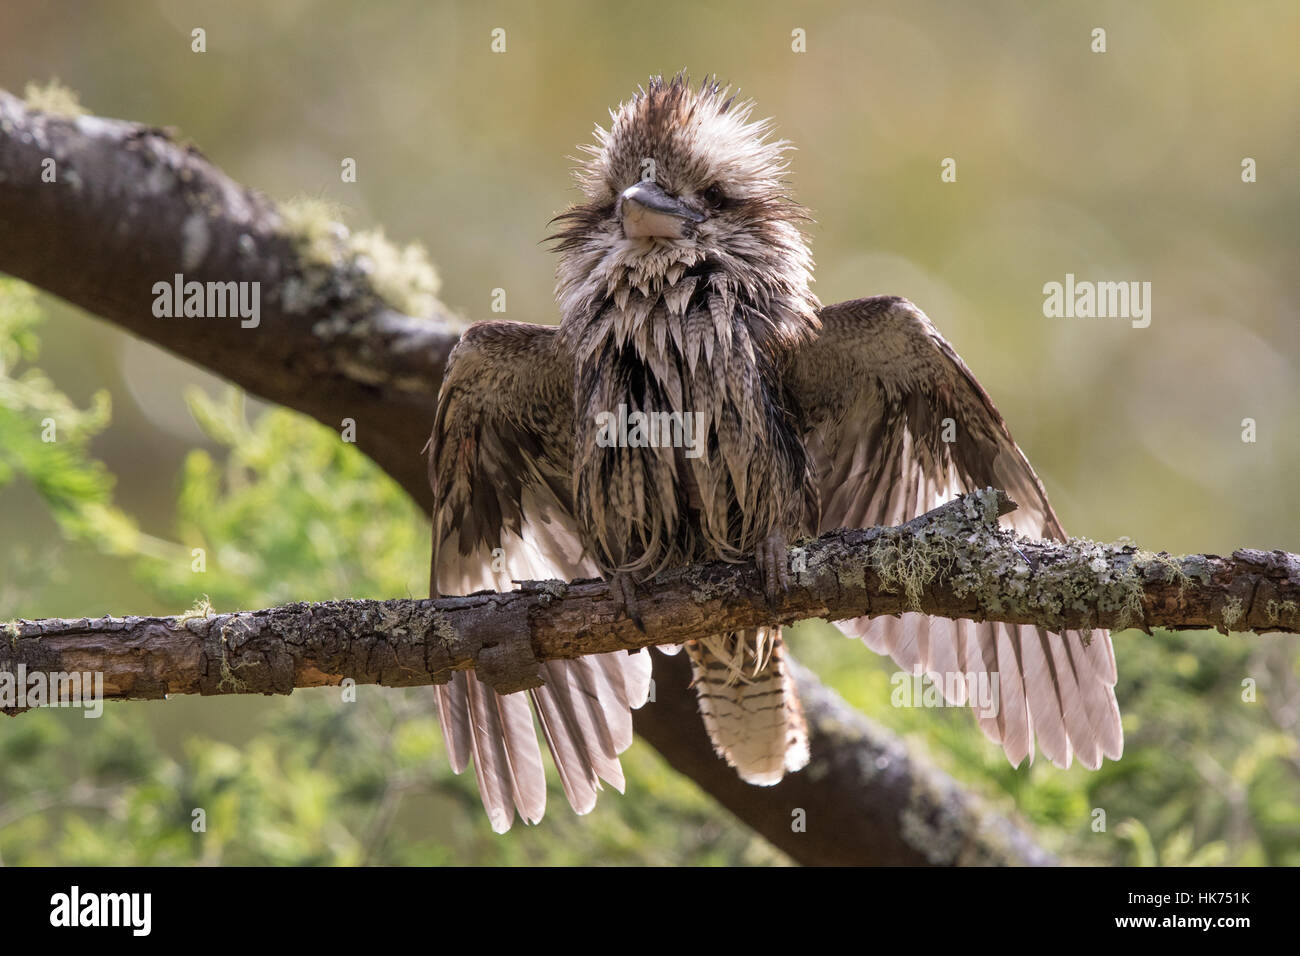 Lachende Kookaburra (Dacelo Novaeguineae) trocknen die nassen Federn nach einem Bad Stockfoto